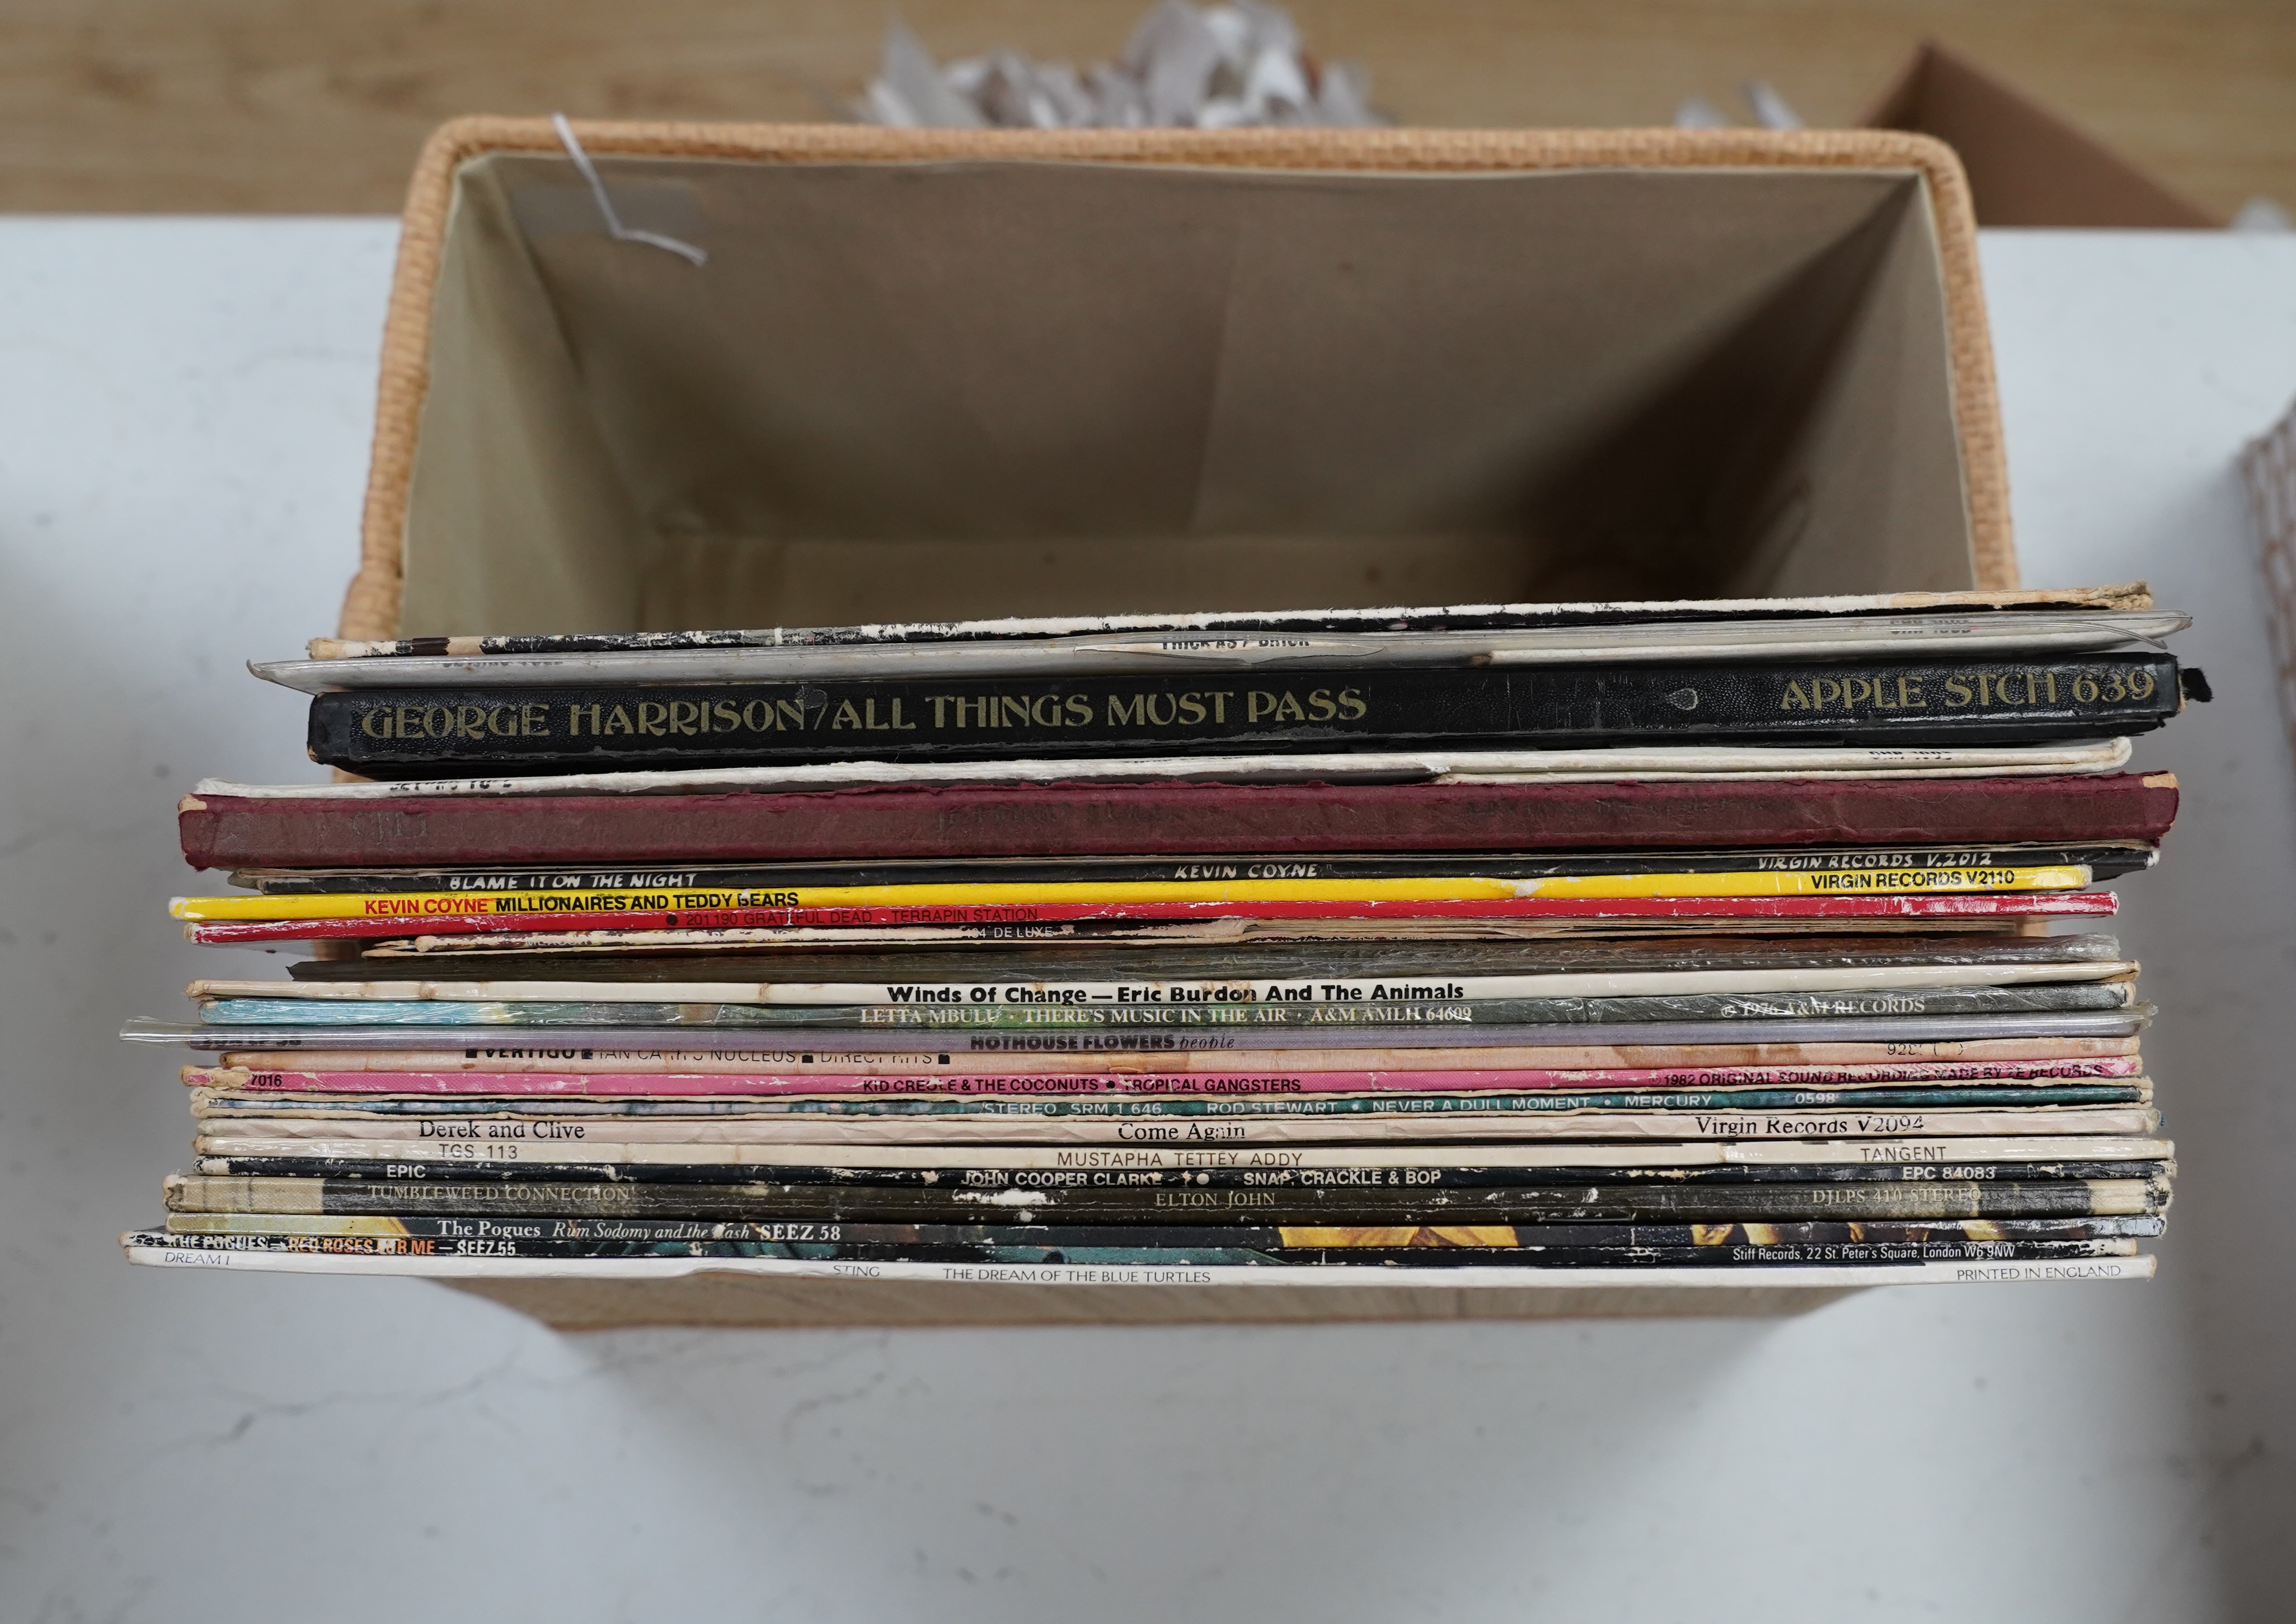 Twenty-five LP records by artists including; George Harrison, Jethro Tull, Grateful Dead, Rod Stewart, etc.